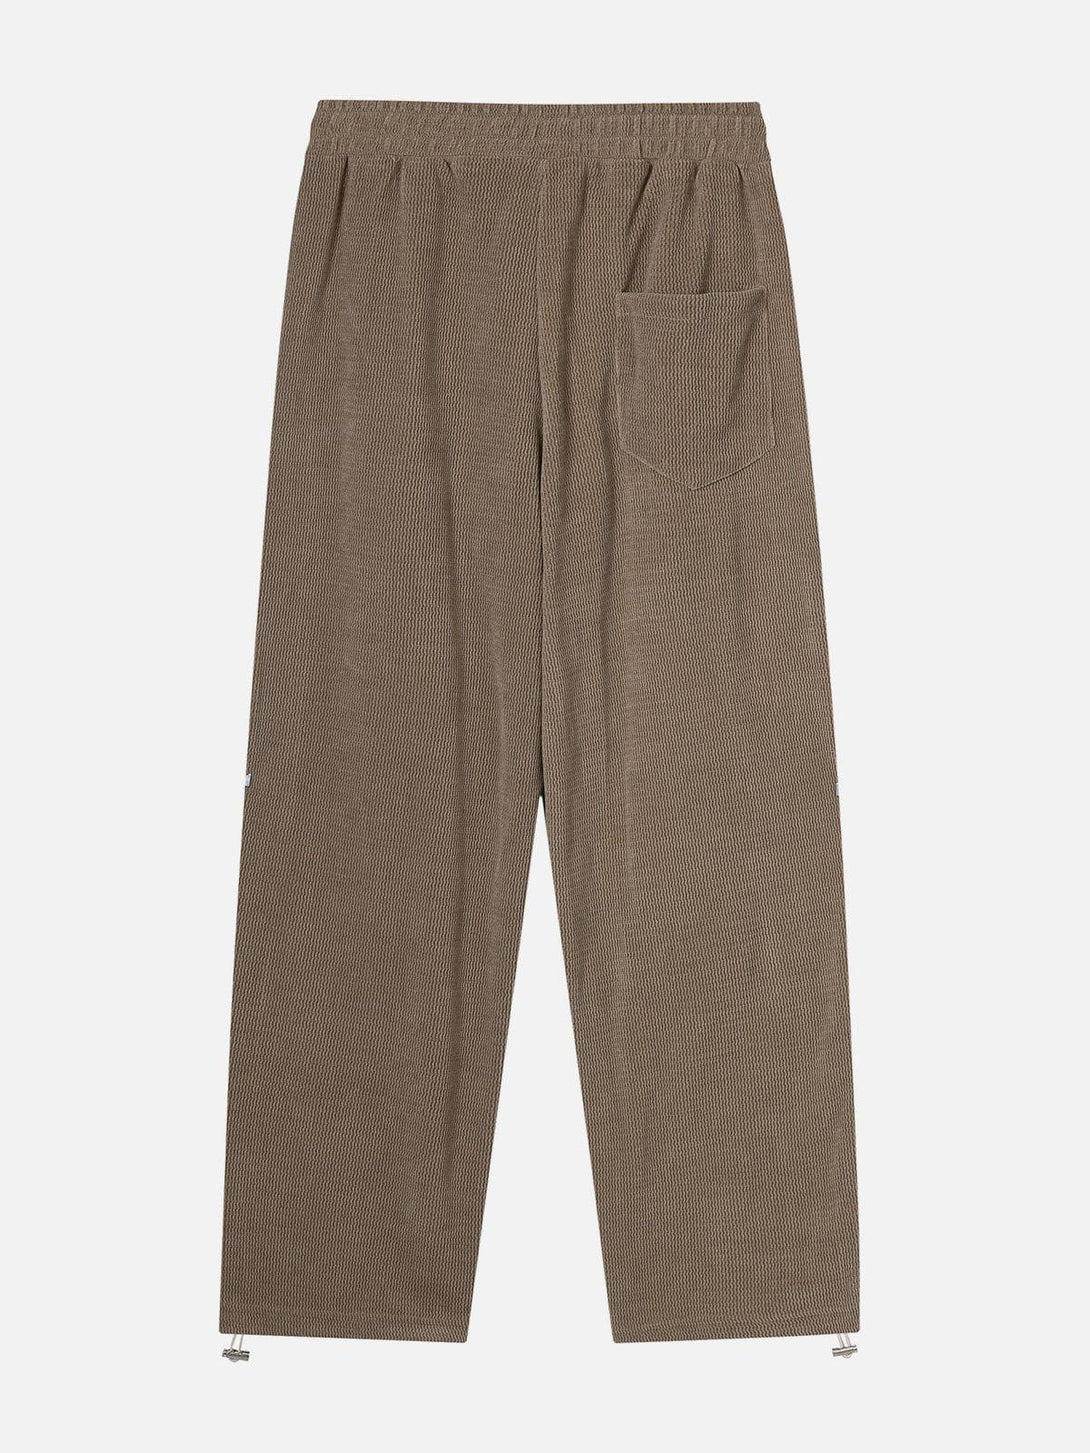 Levefly - Corduroy Drawstring Pants - Streetwear Fashion - levefly.com